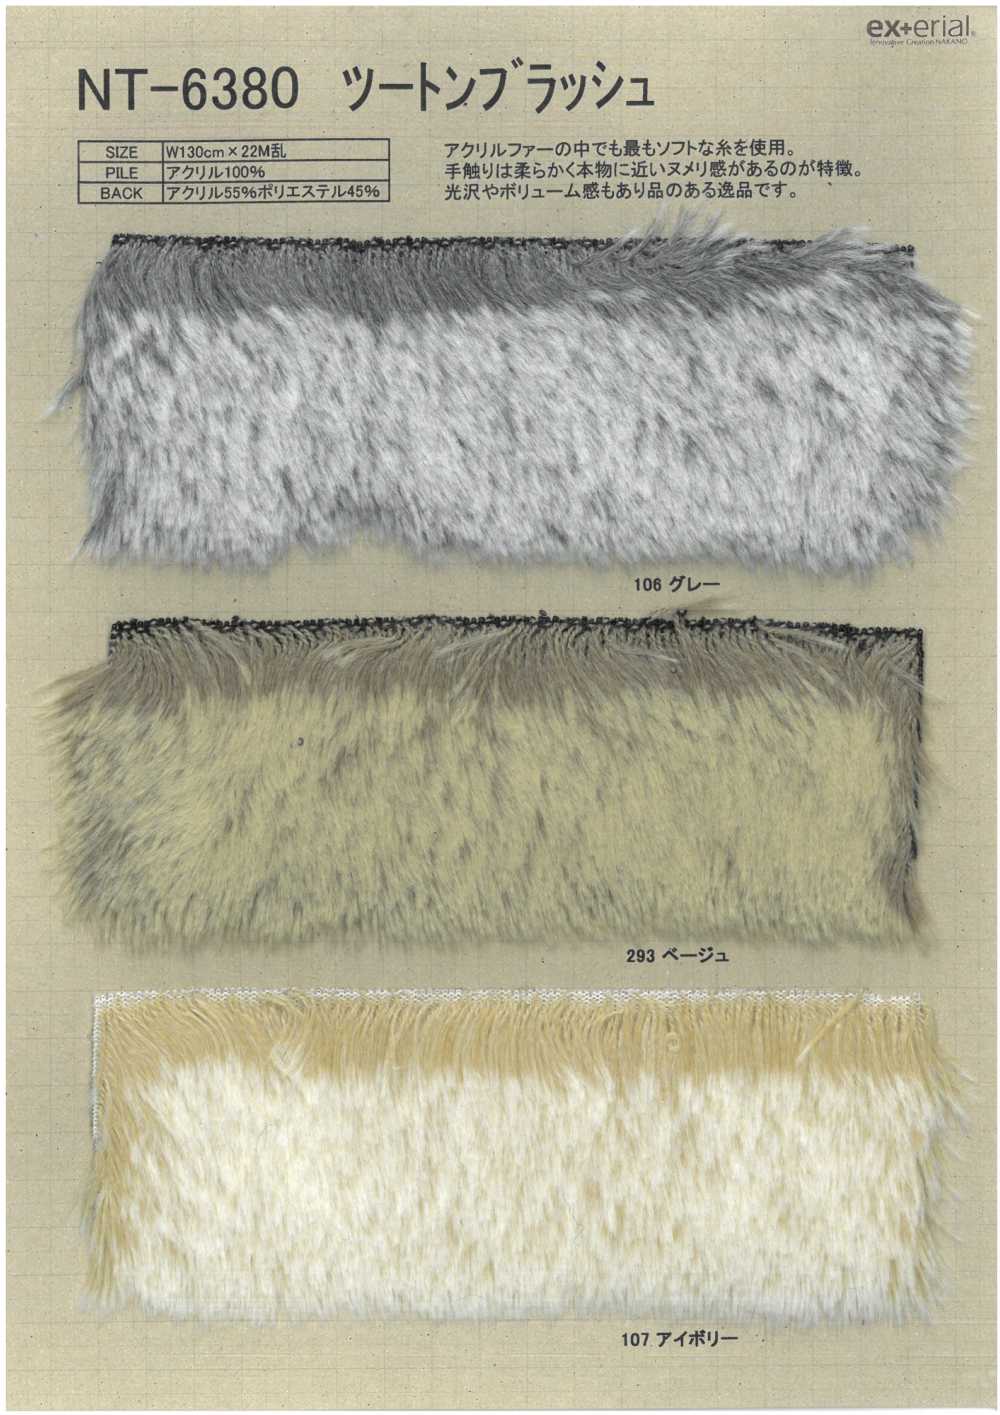 NT-6380 Craft Fur [Bleu Blush Bicolore][Fabrication De Textile] Industrie Du Jersey Nakano